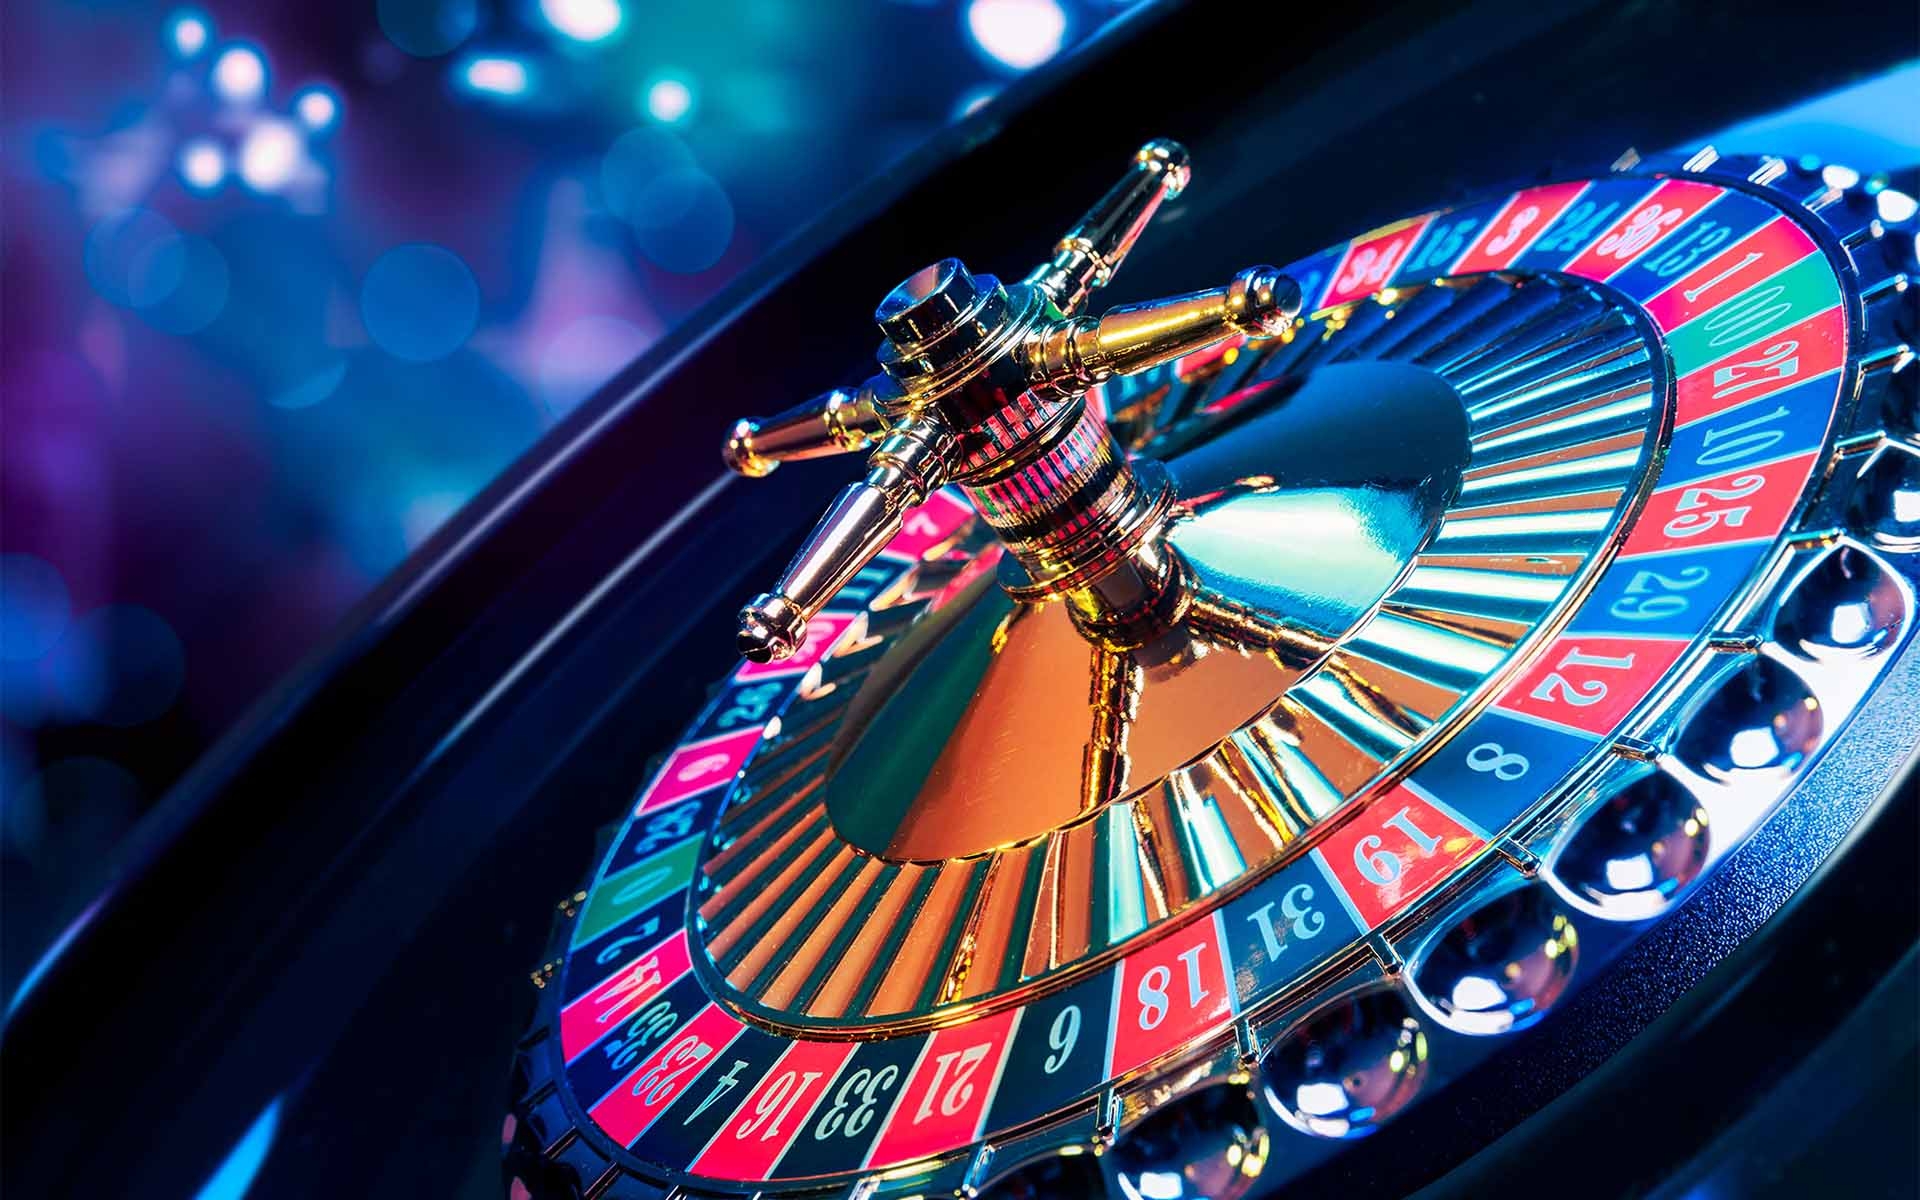 Top Slot Factory Casino Sites Gaming